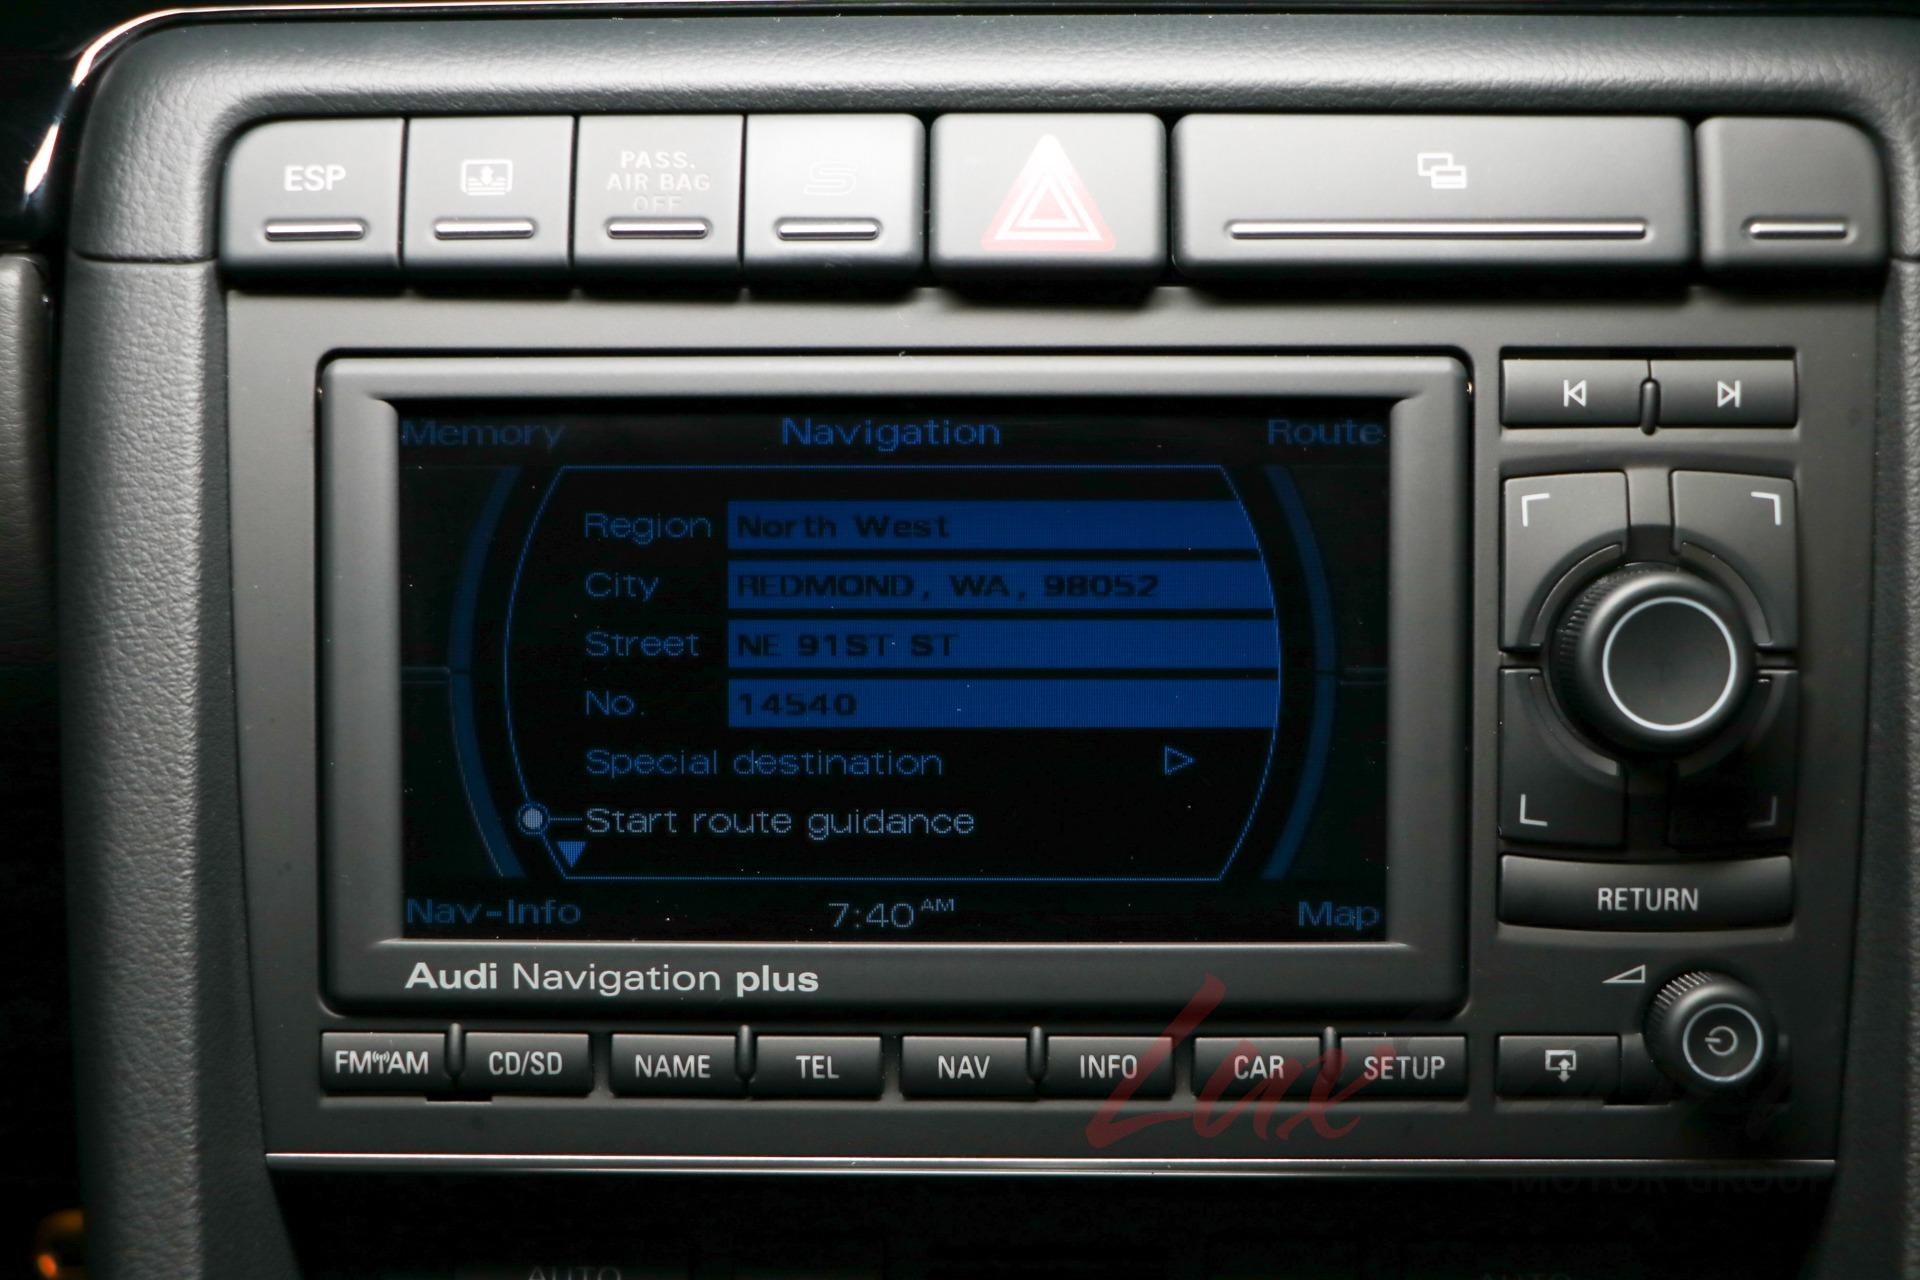 Used 2008 Audi RS 4 quattro | Plainview, NY